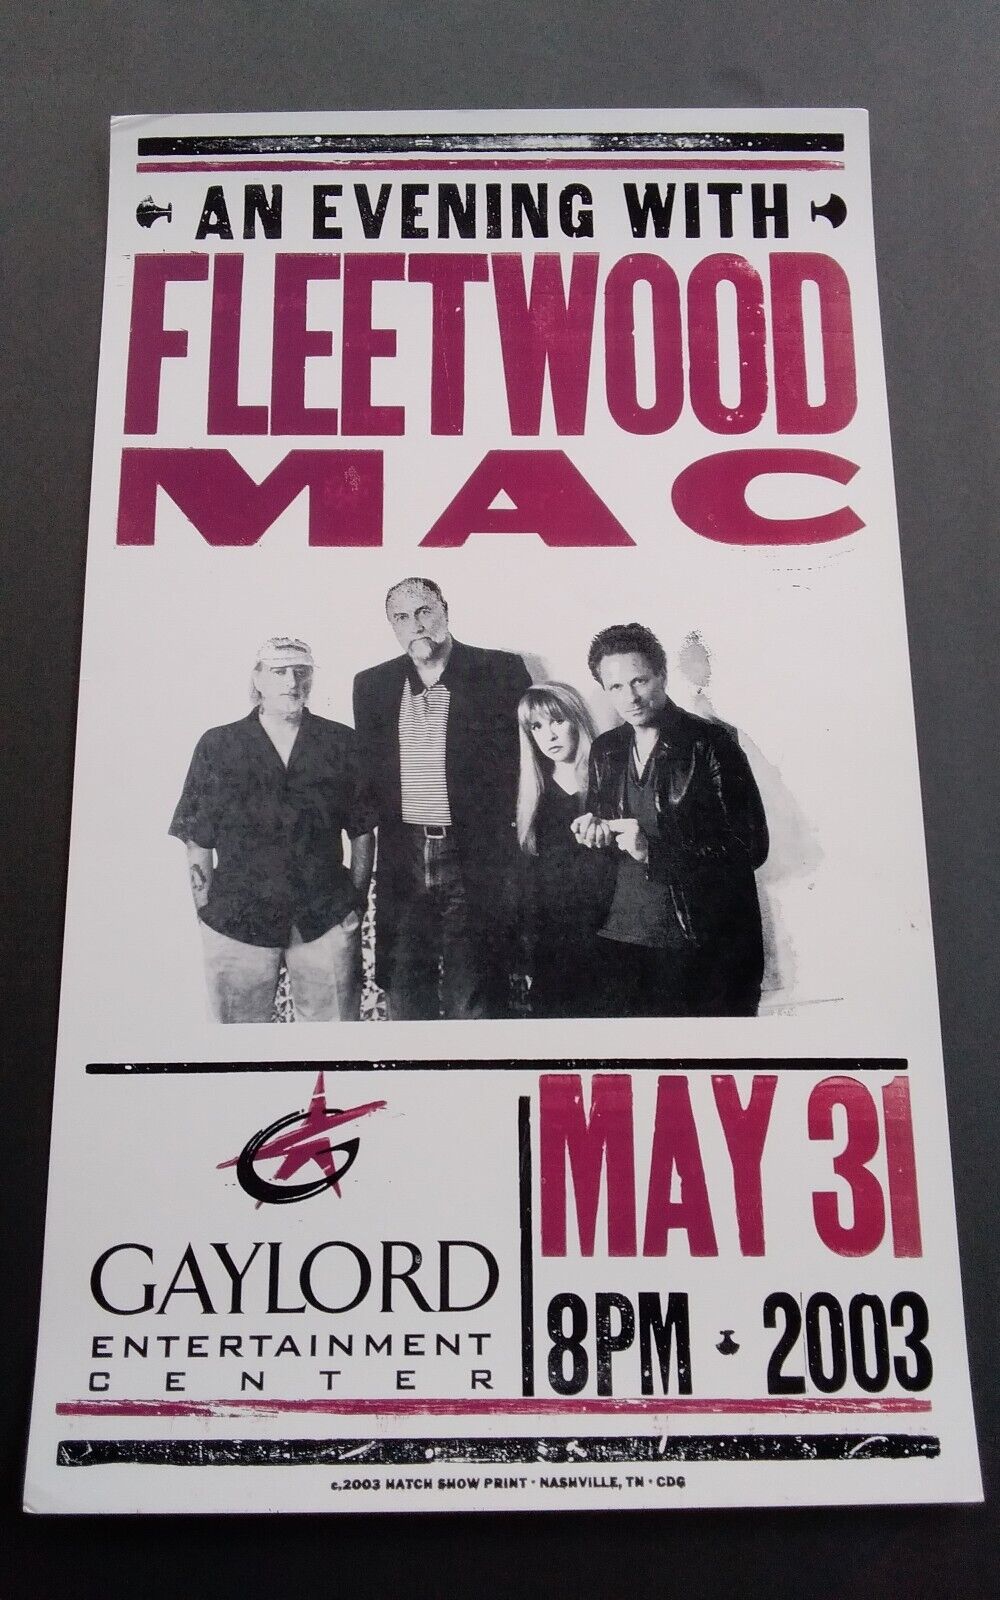 Fleetwood Mac 2003 Hatch Show Print Nashville GAYLORD Concert Poster BRIDGESTONE